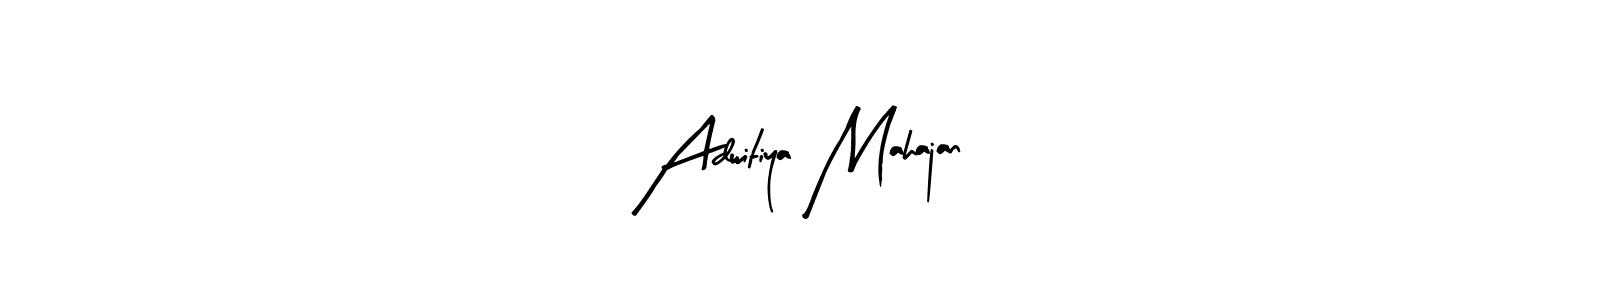 How to make Adwitiya Mahajan signature? Arty Signature is a professional autograph style. Create handwritten signature for Adwitiya Mahajan name. Adwitiya Mahajan signature style 8 images and pictures png